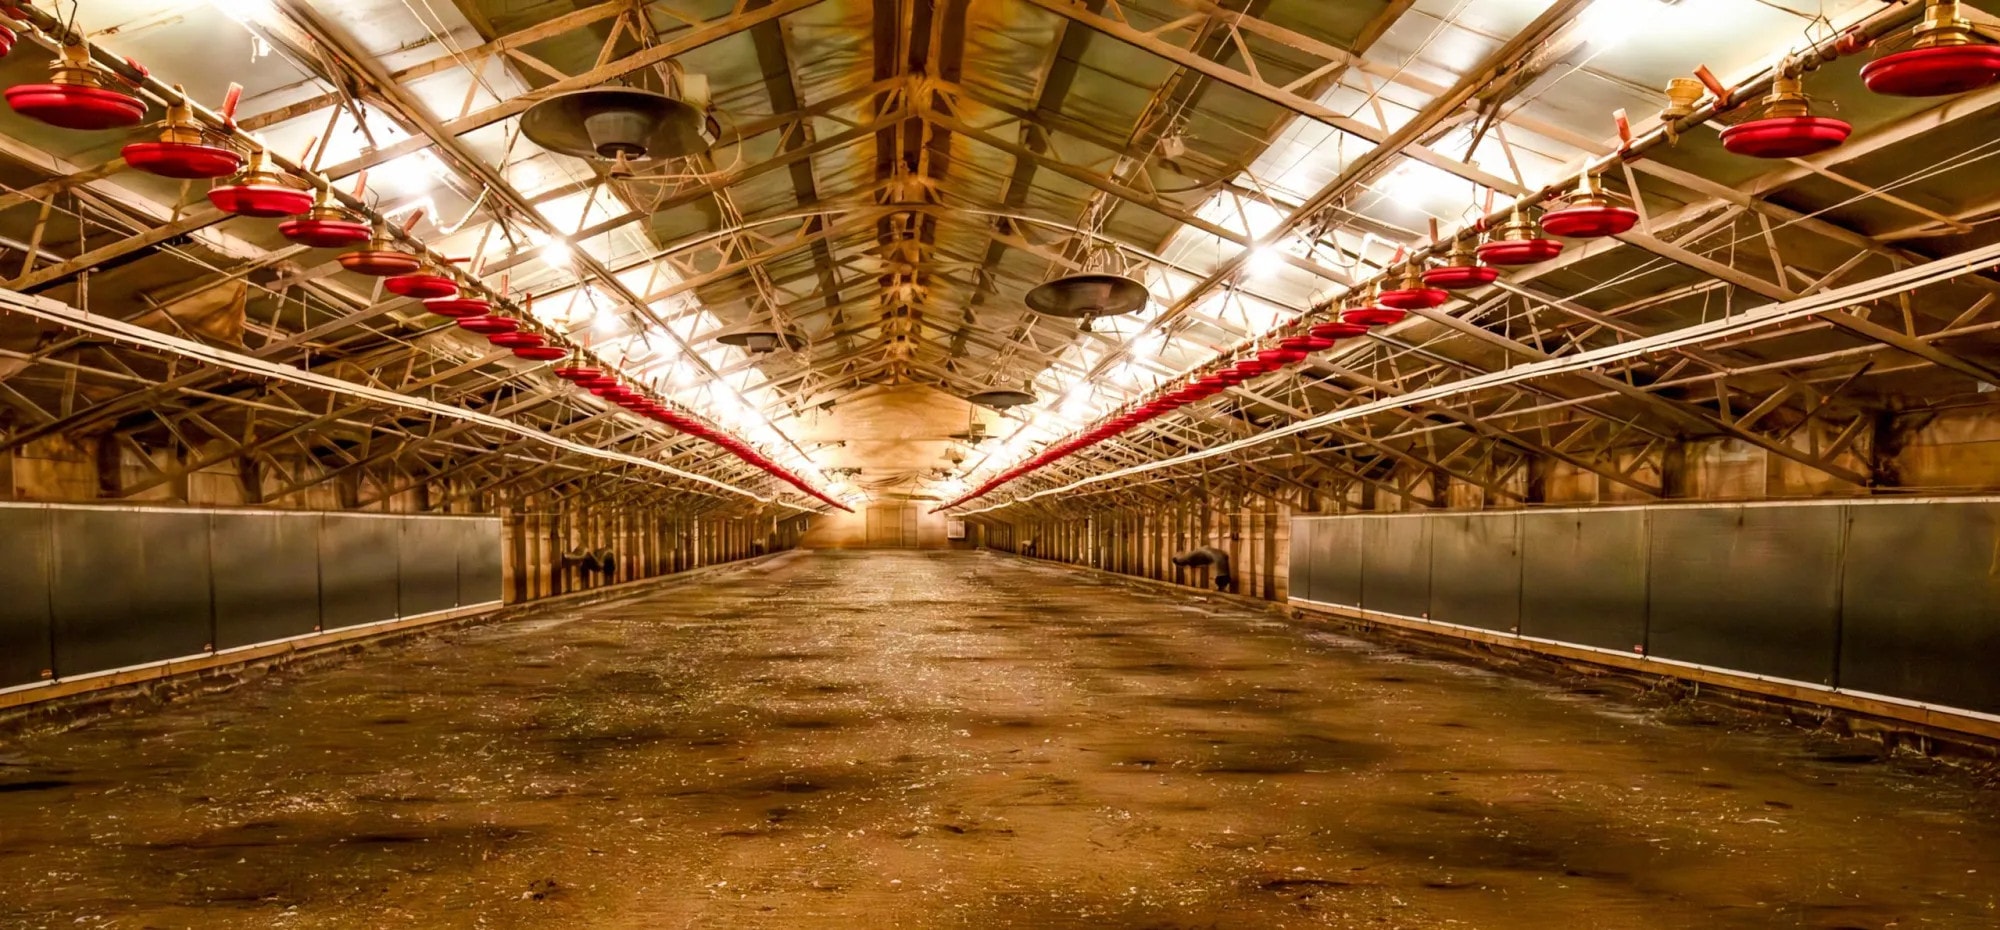 Image - Early Morning Calls. Barren Chicken Barns. Millions in Debt.